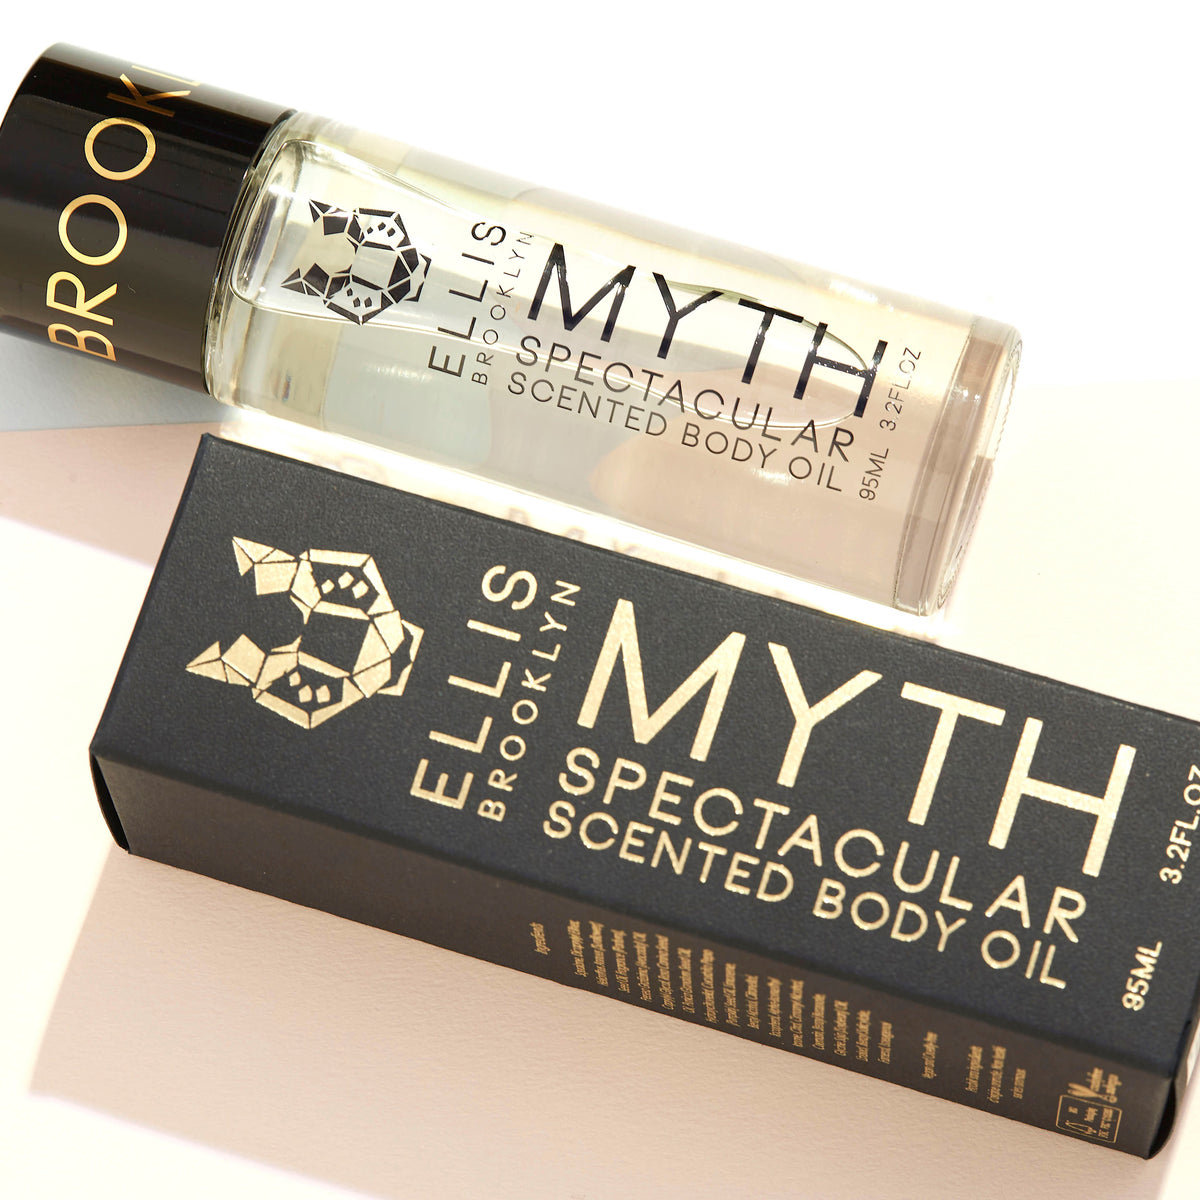 MYTH body oil box